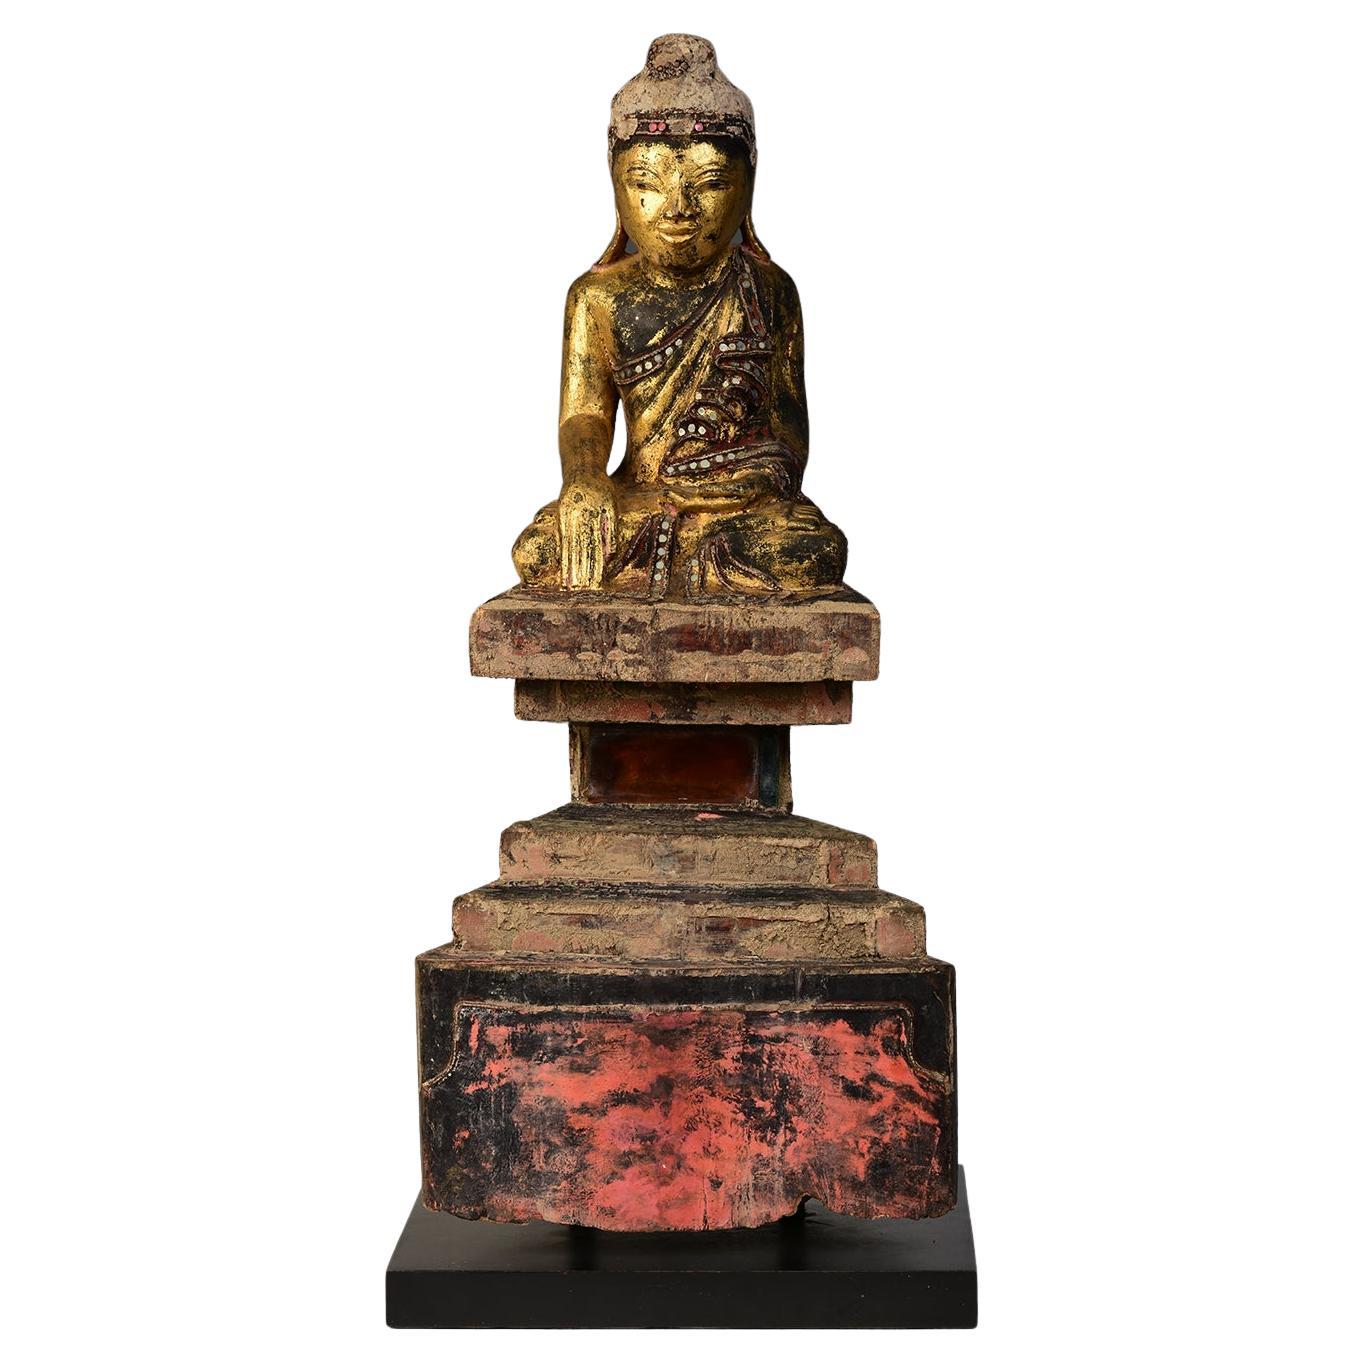  Early 19th Century, Antique Tai Yai Burmese Wooden Seated Buddha